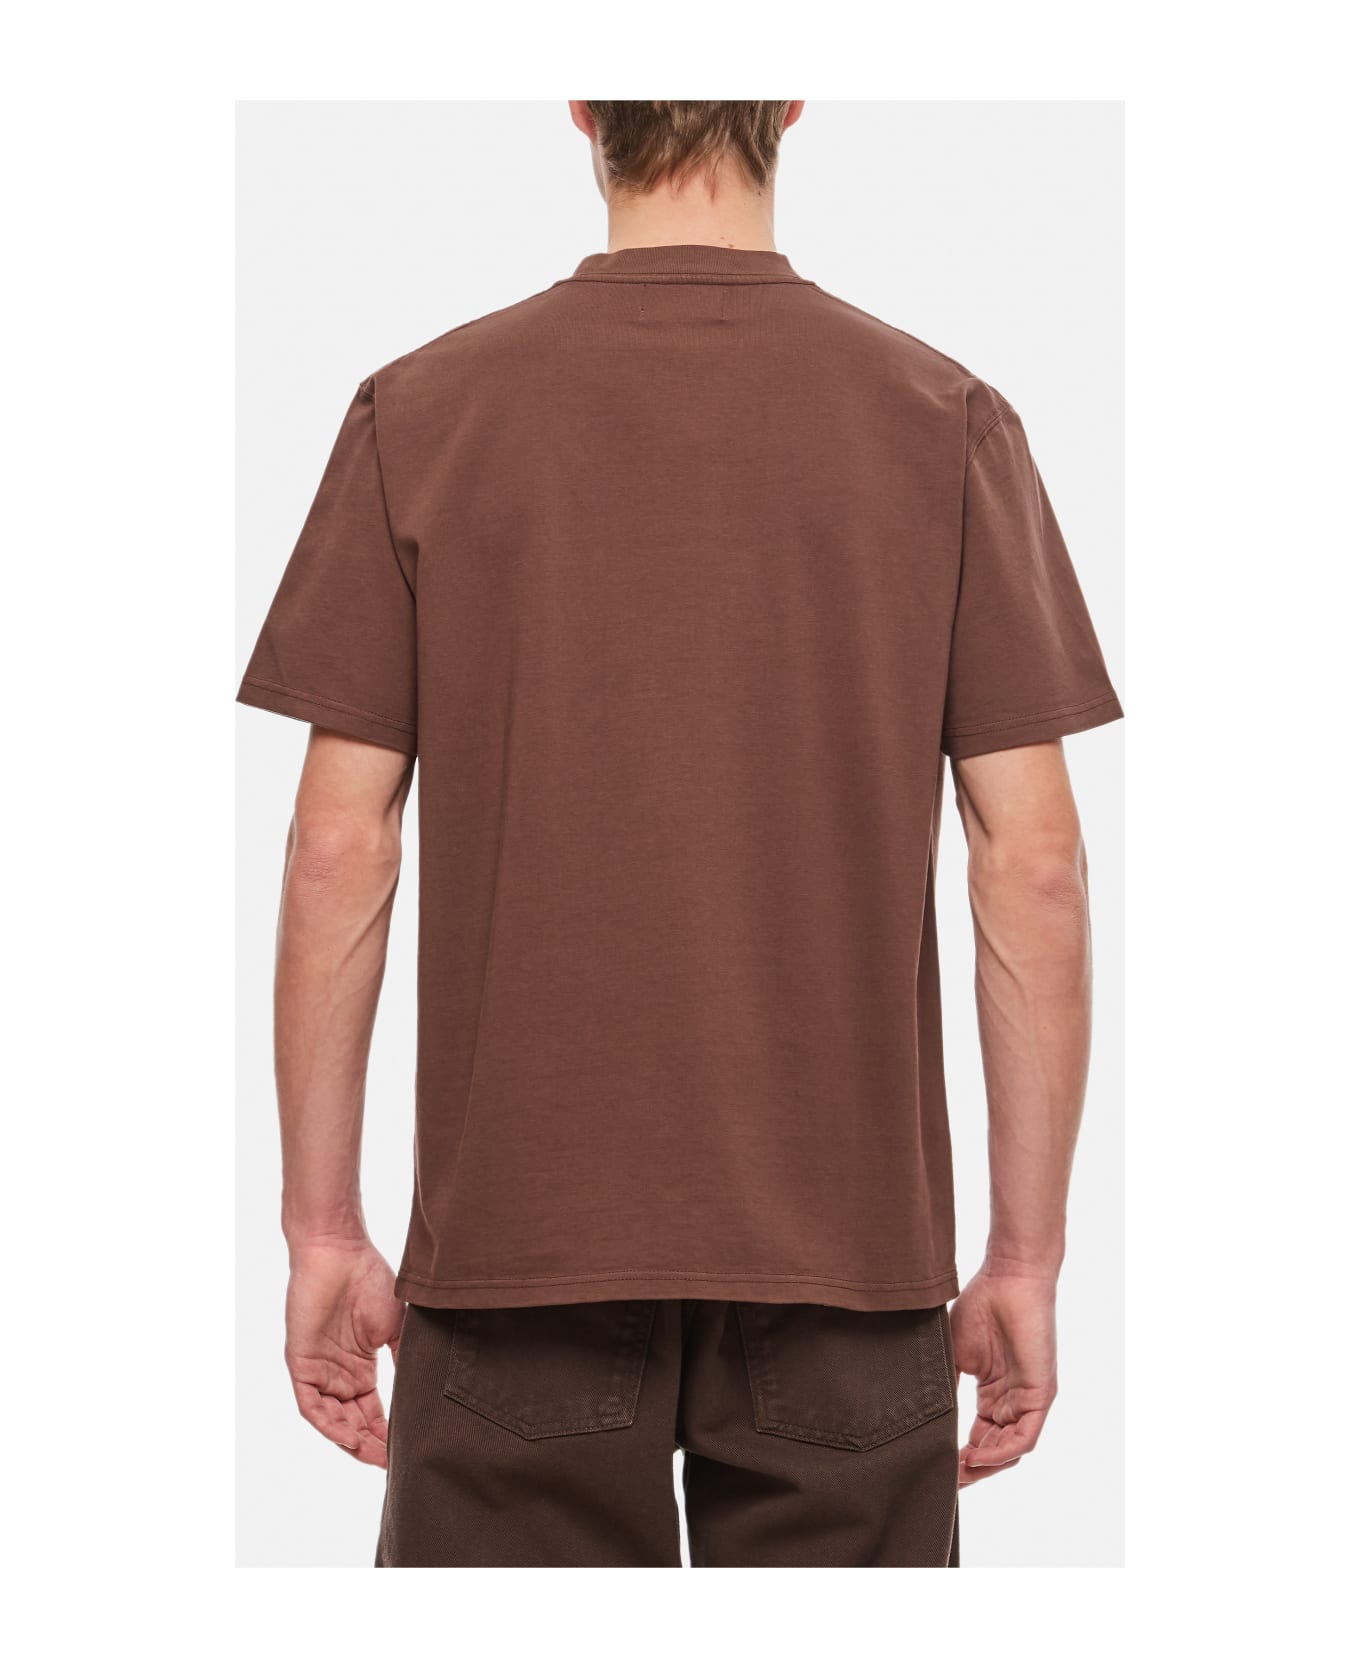 Palmes Cotton Apple T-shirt - Brown